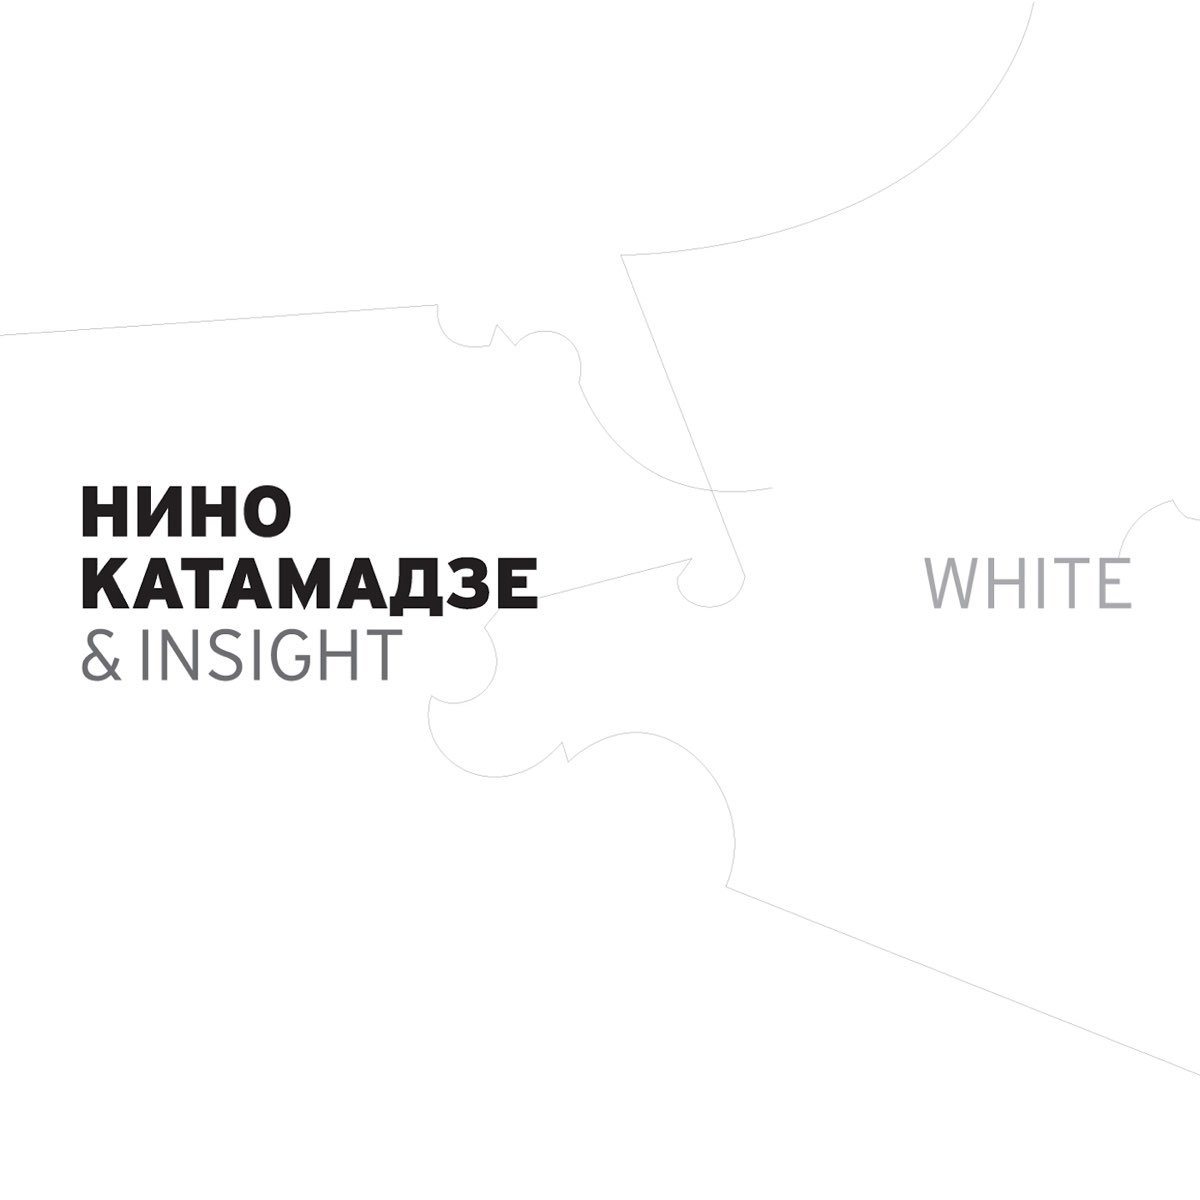 Нино бело. Нино Катамадзе. Нино Катамадзе 2006. Нино Катамадзе & Insight. Нино Катамадзе White.